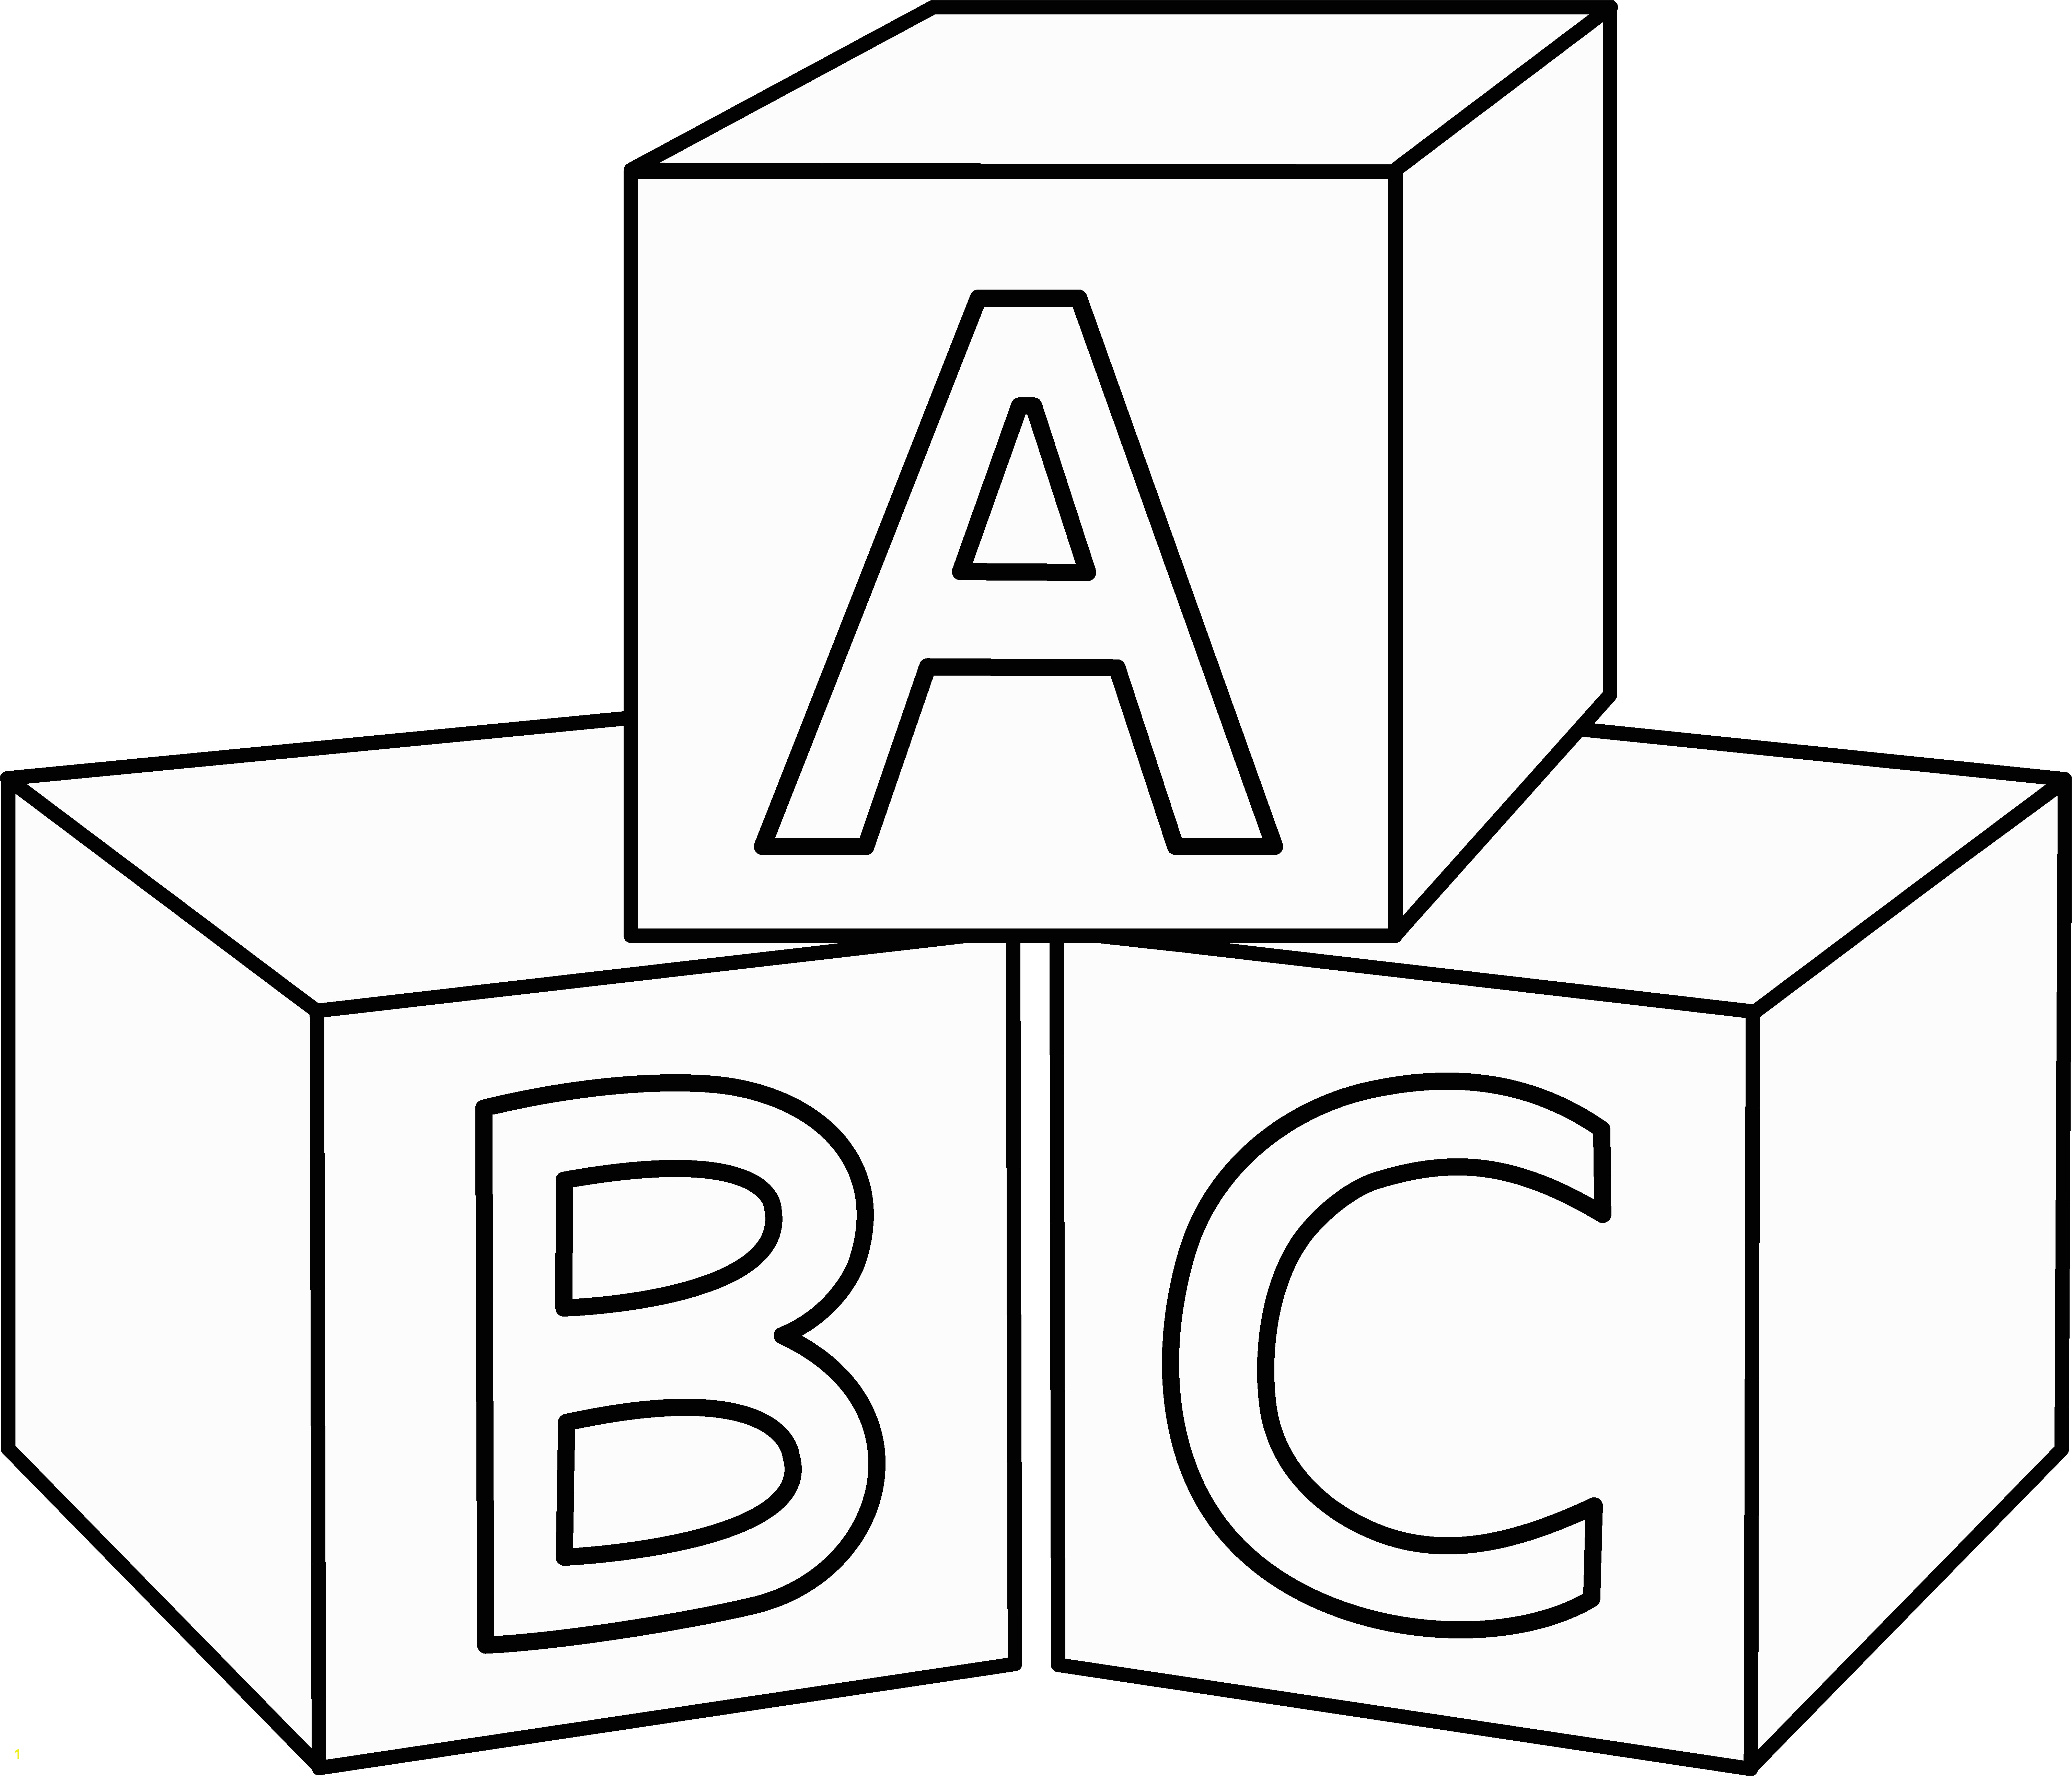 ABC Blocks Coloring Page Free Clip Art